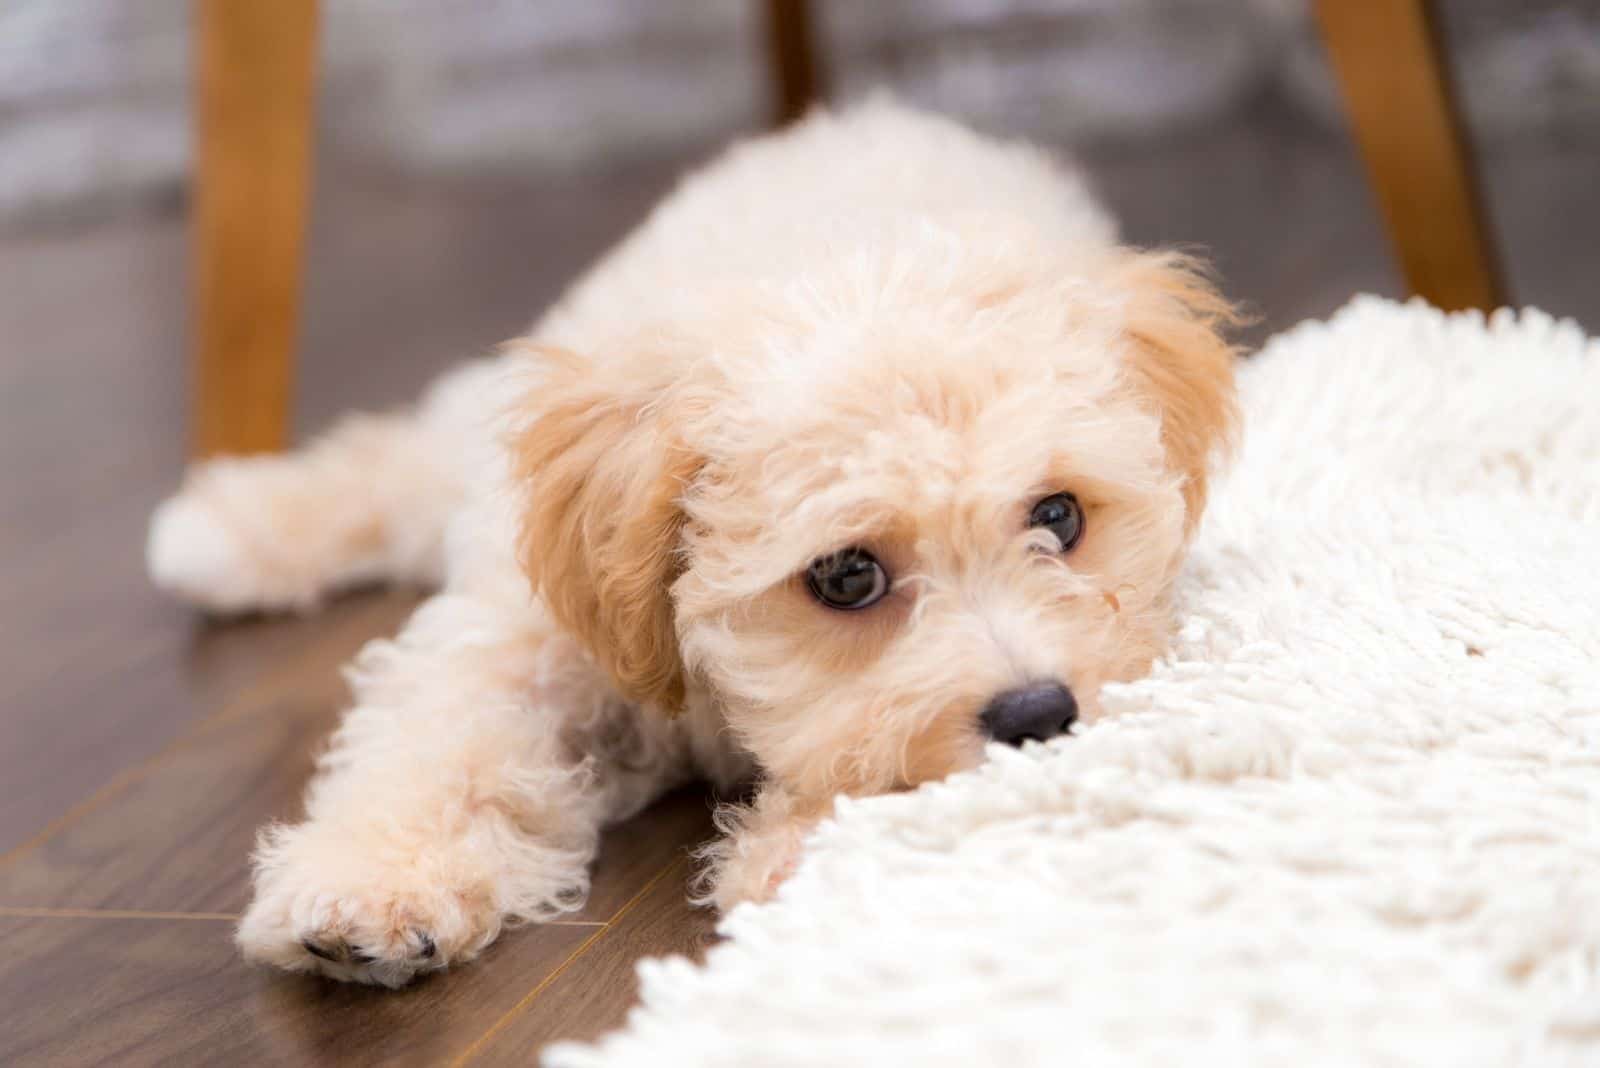 a little puppy biting on the livingrooms fur carpet